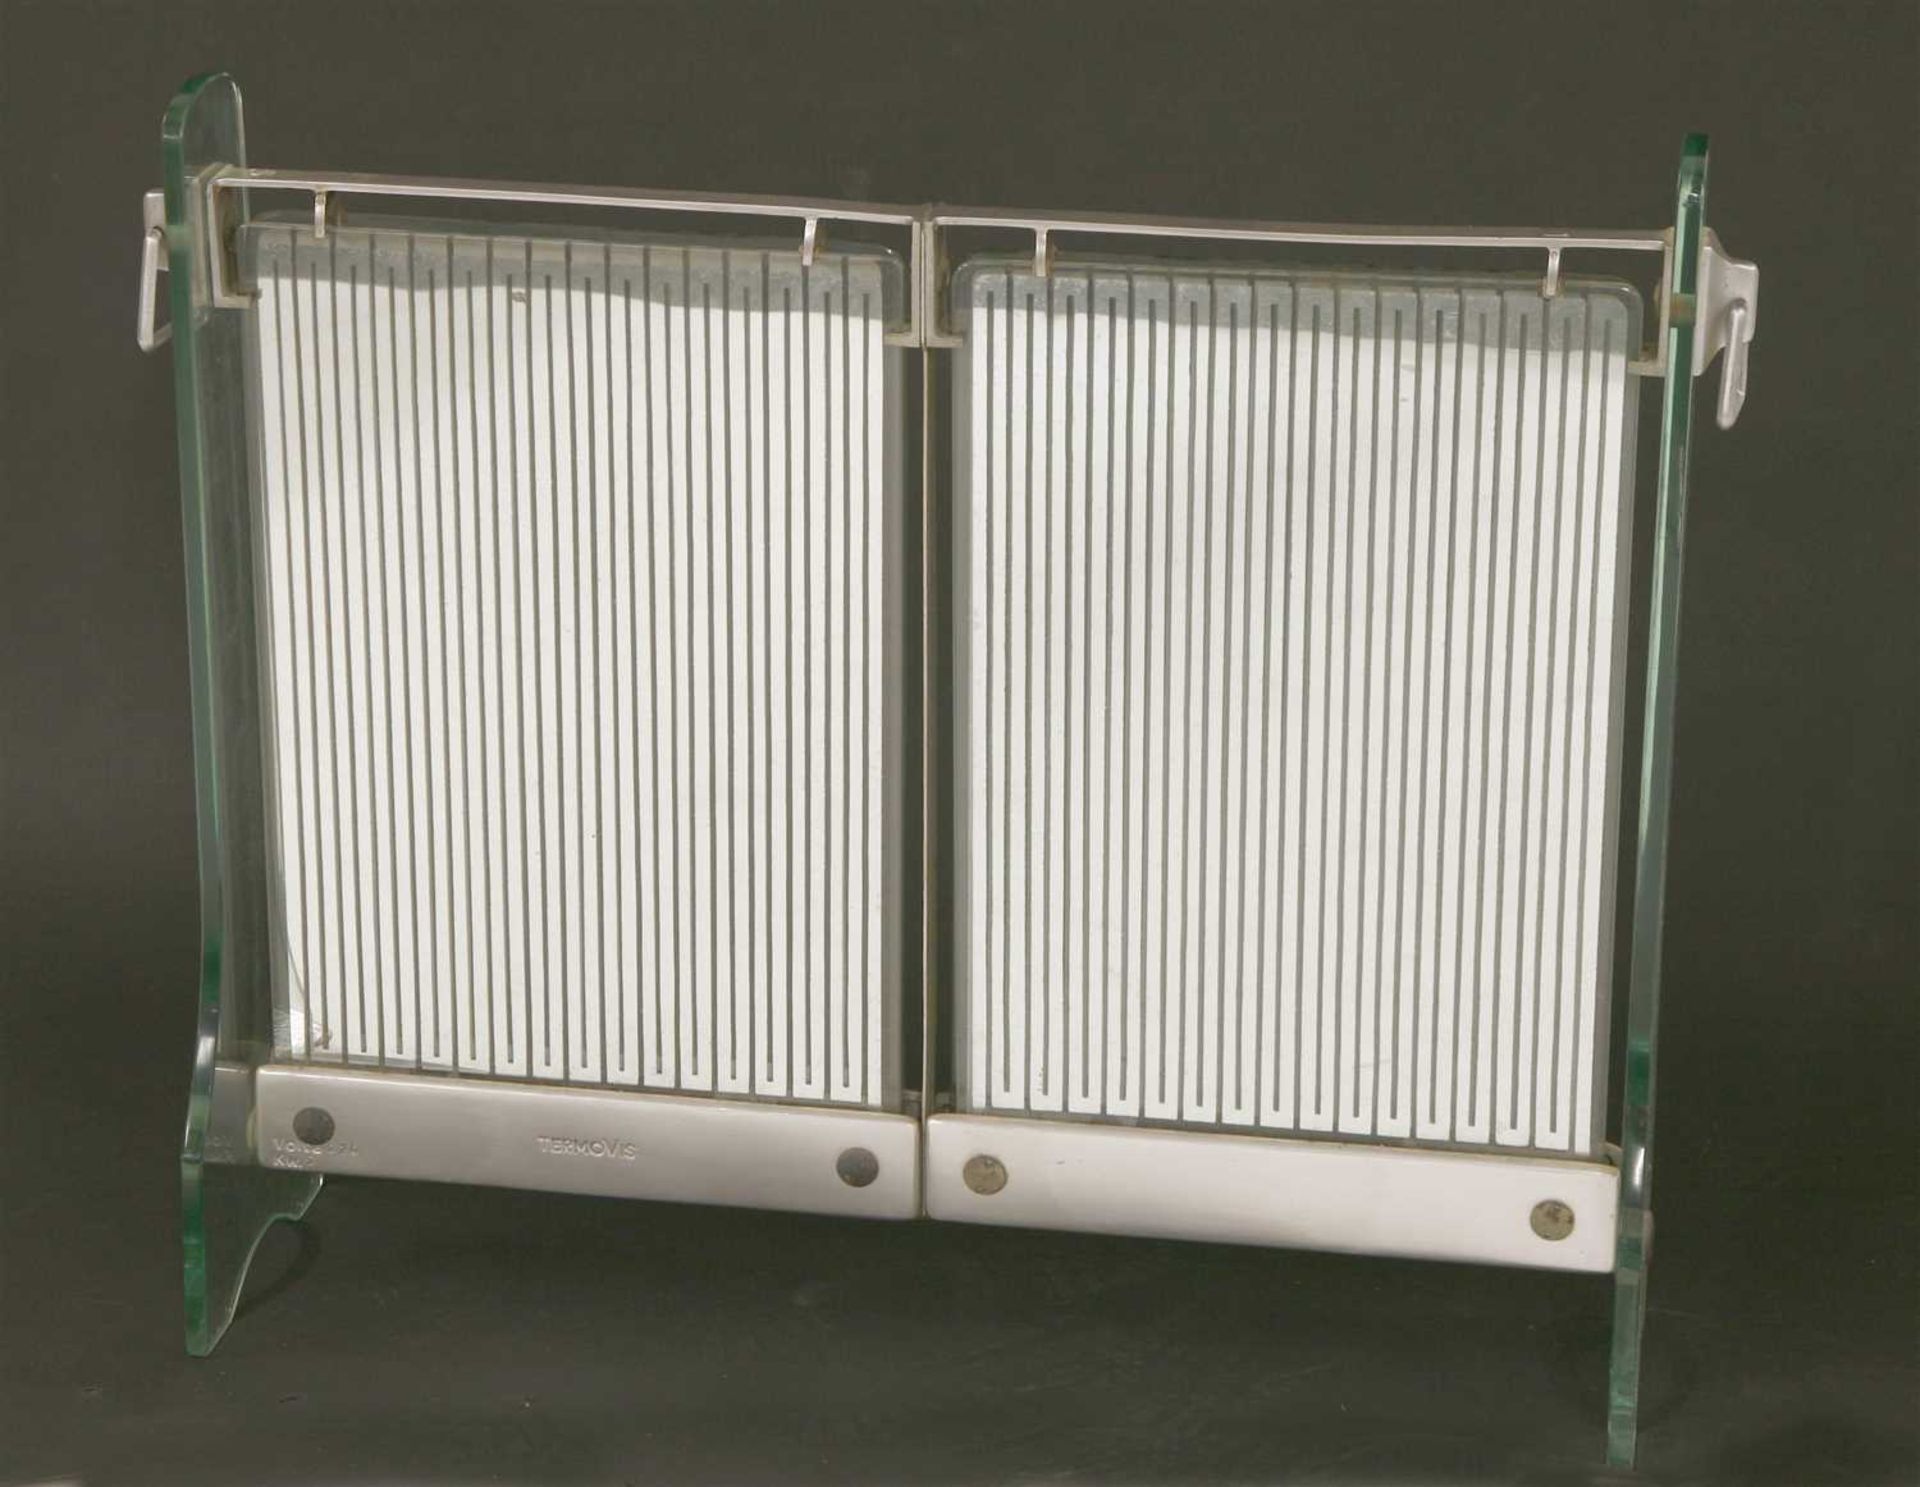 A Termovis Radiant heater,